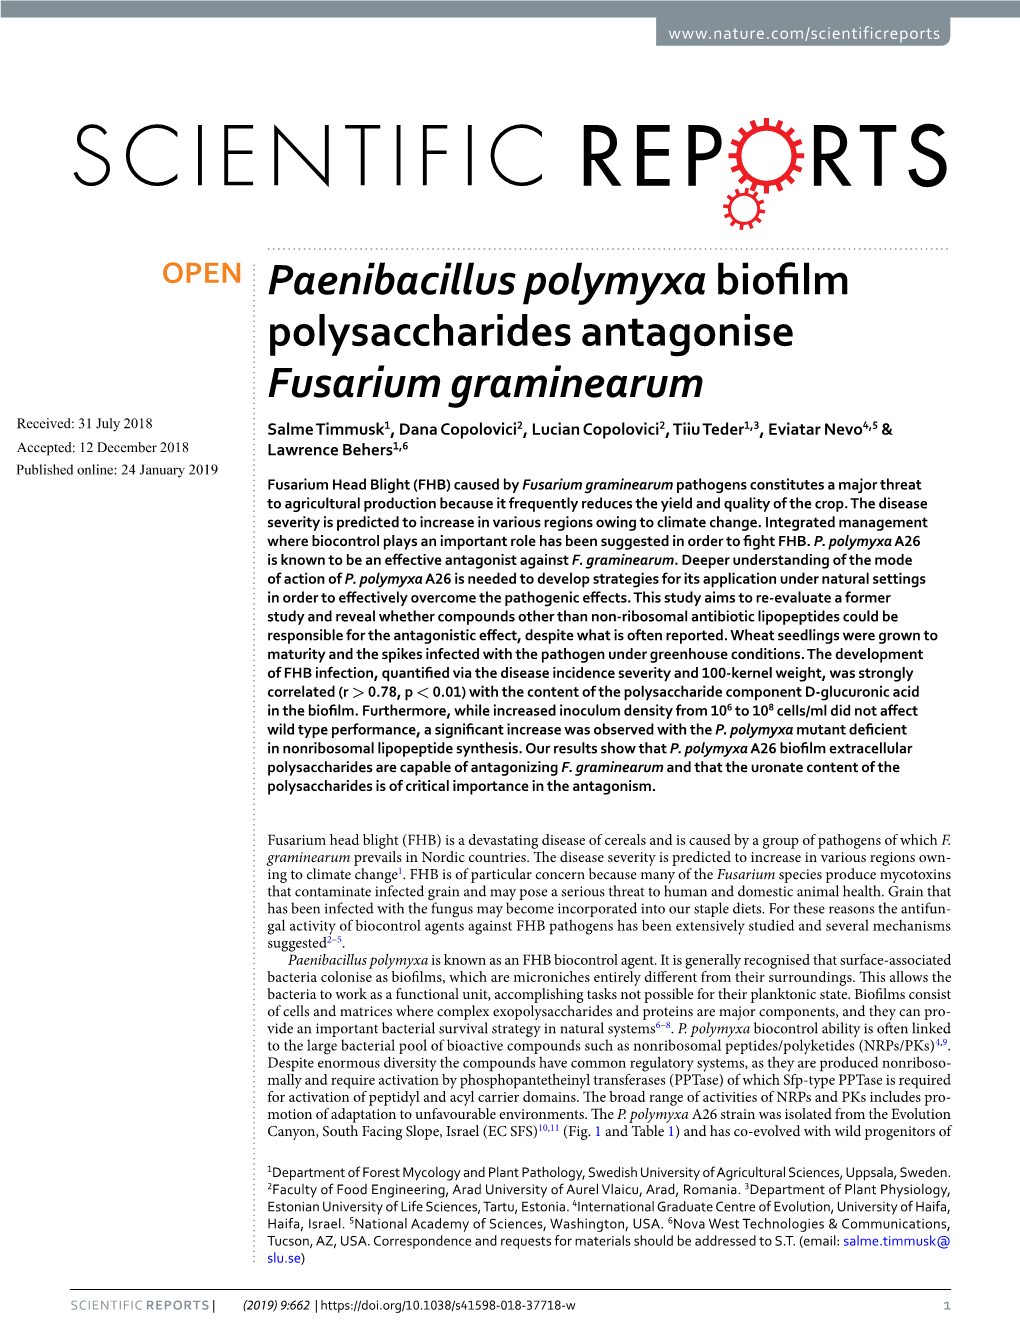 Paenibacillus Polymyxa Biofilm Polysaccharides Antagonise